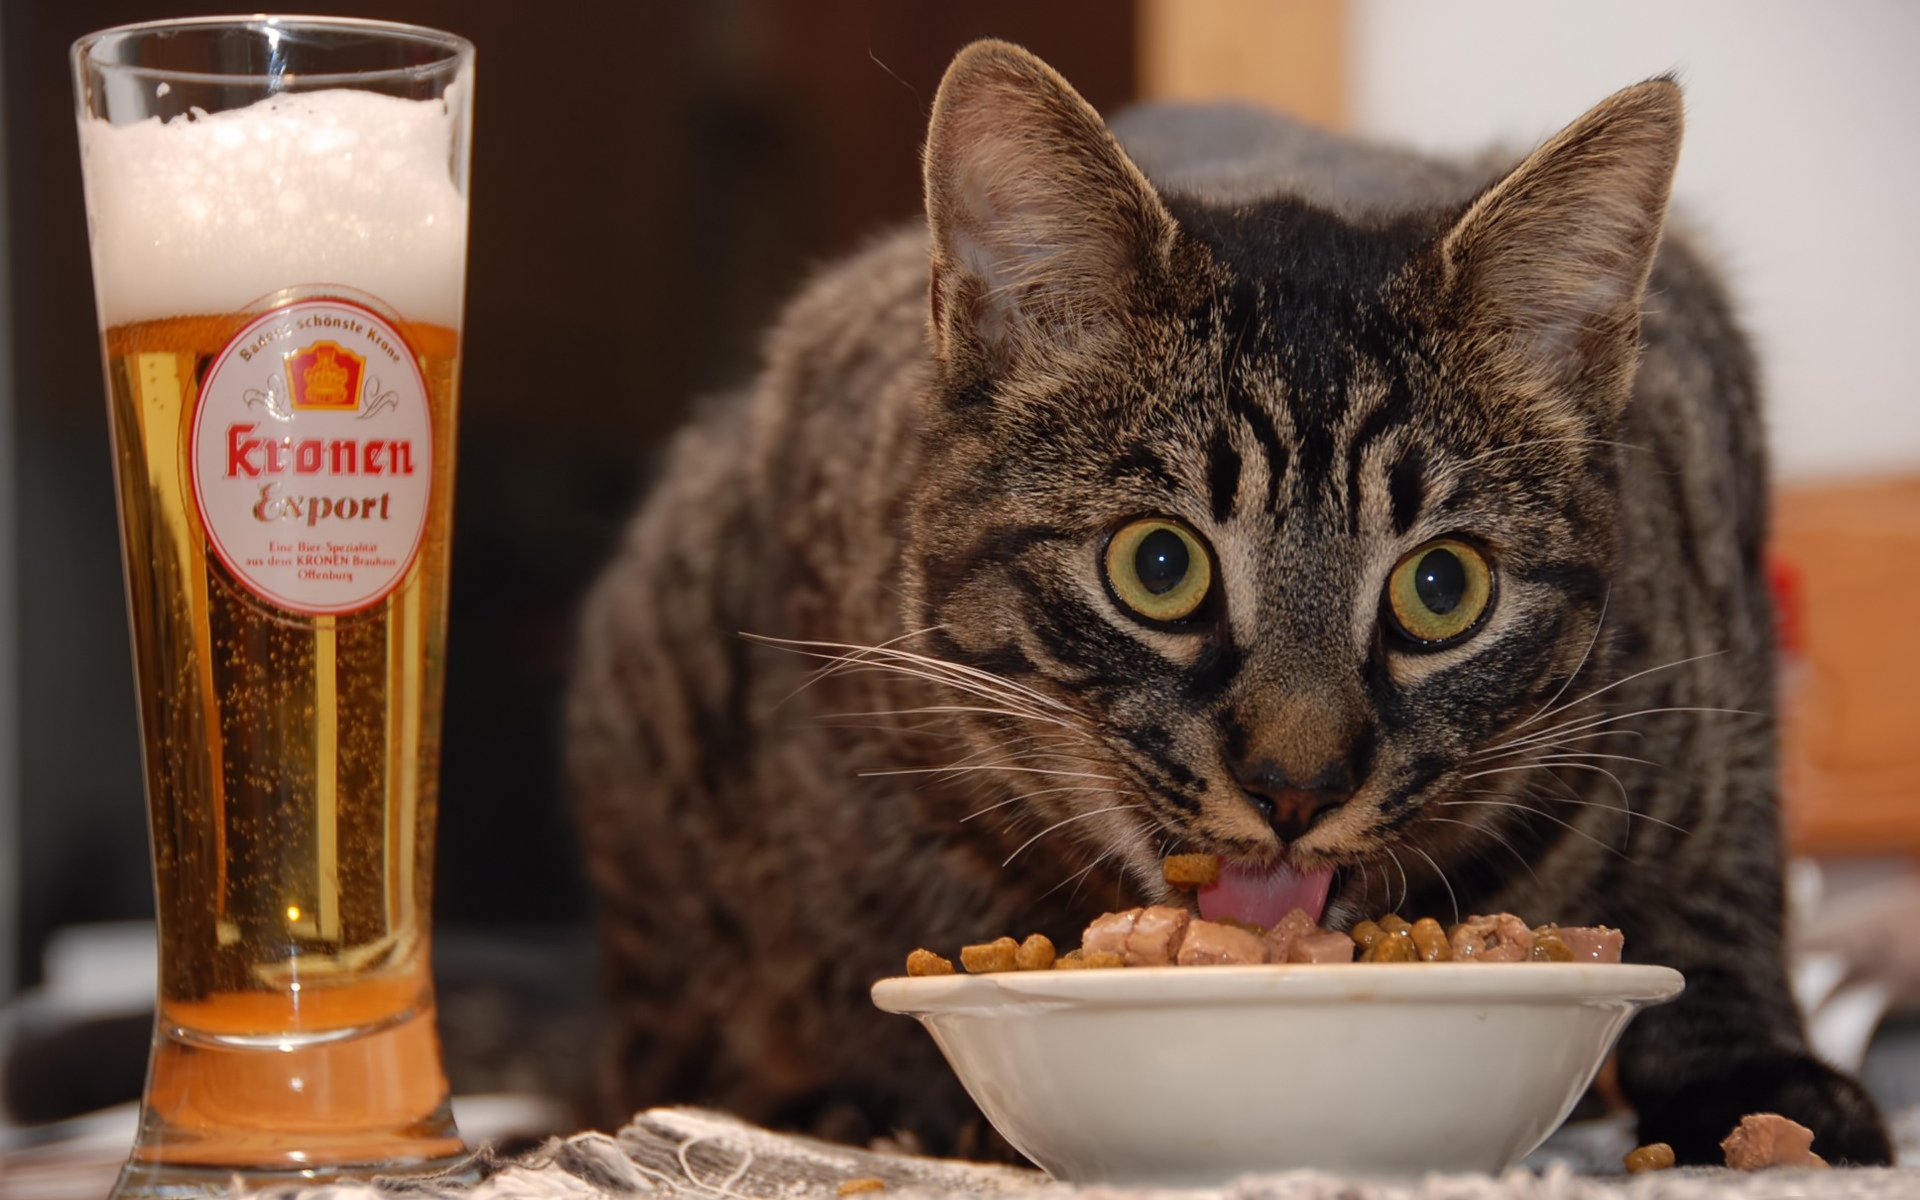 Cat Eating wallpapers | Cat Eating stock photos